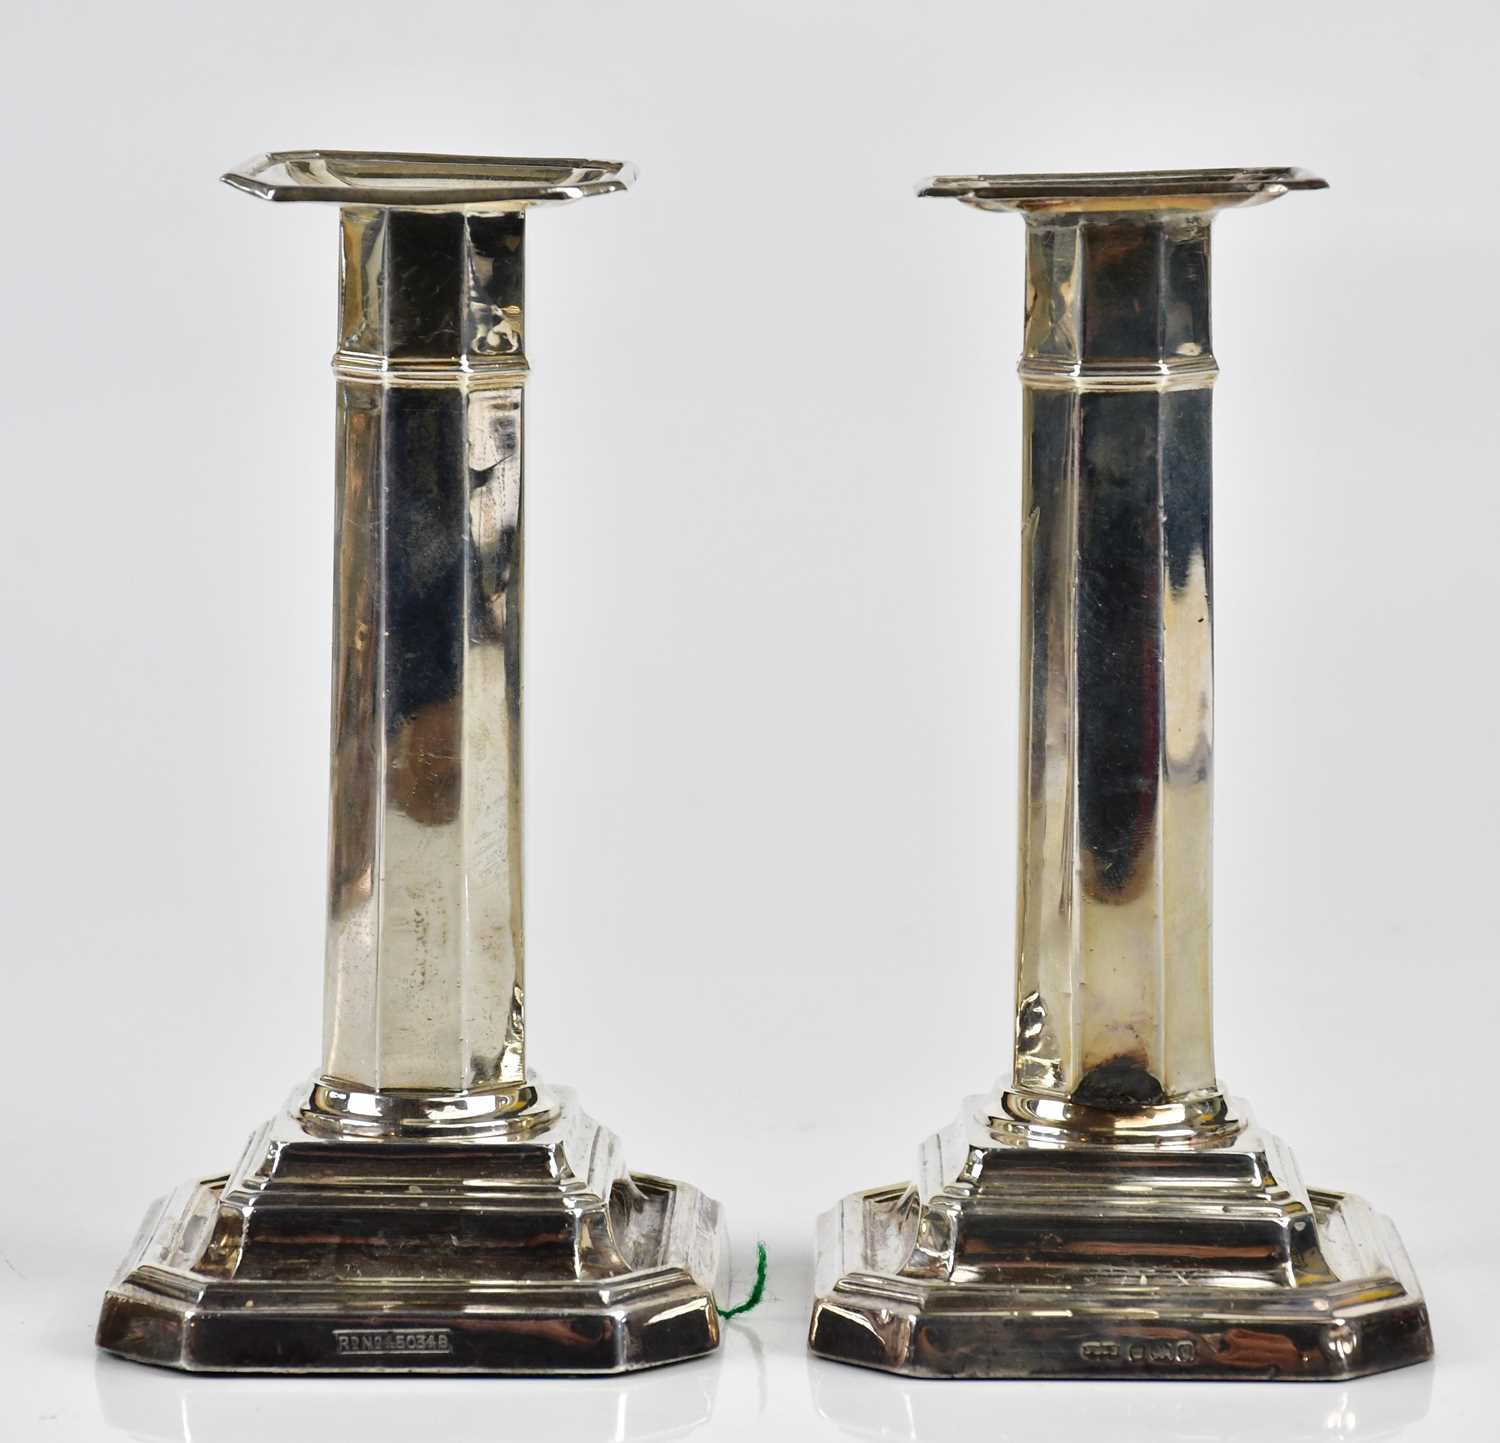 JAMES DIXON & SONS; a pair of Edward VII hallmarked silver candlesticks with octagonal columns,